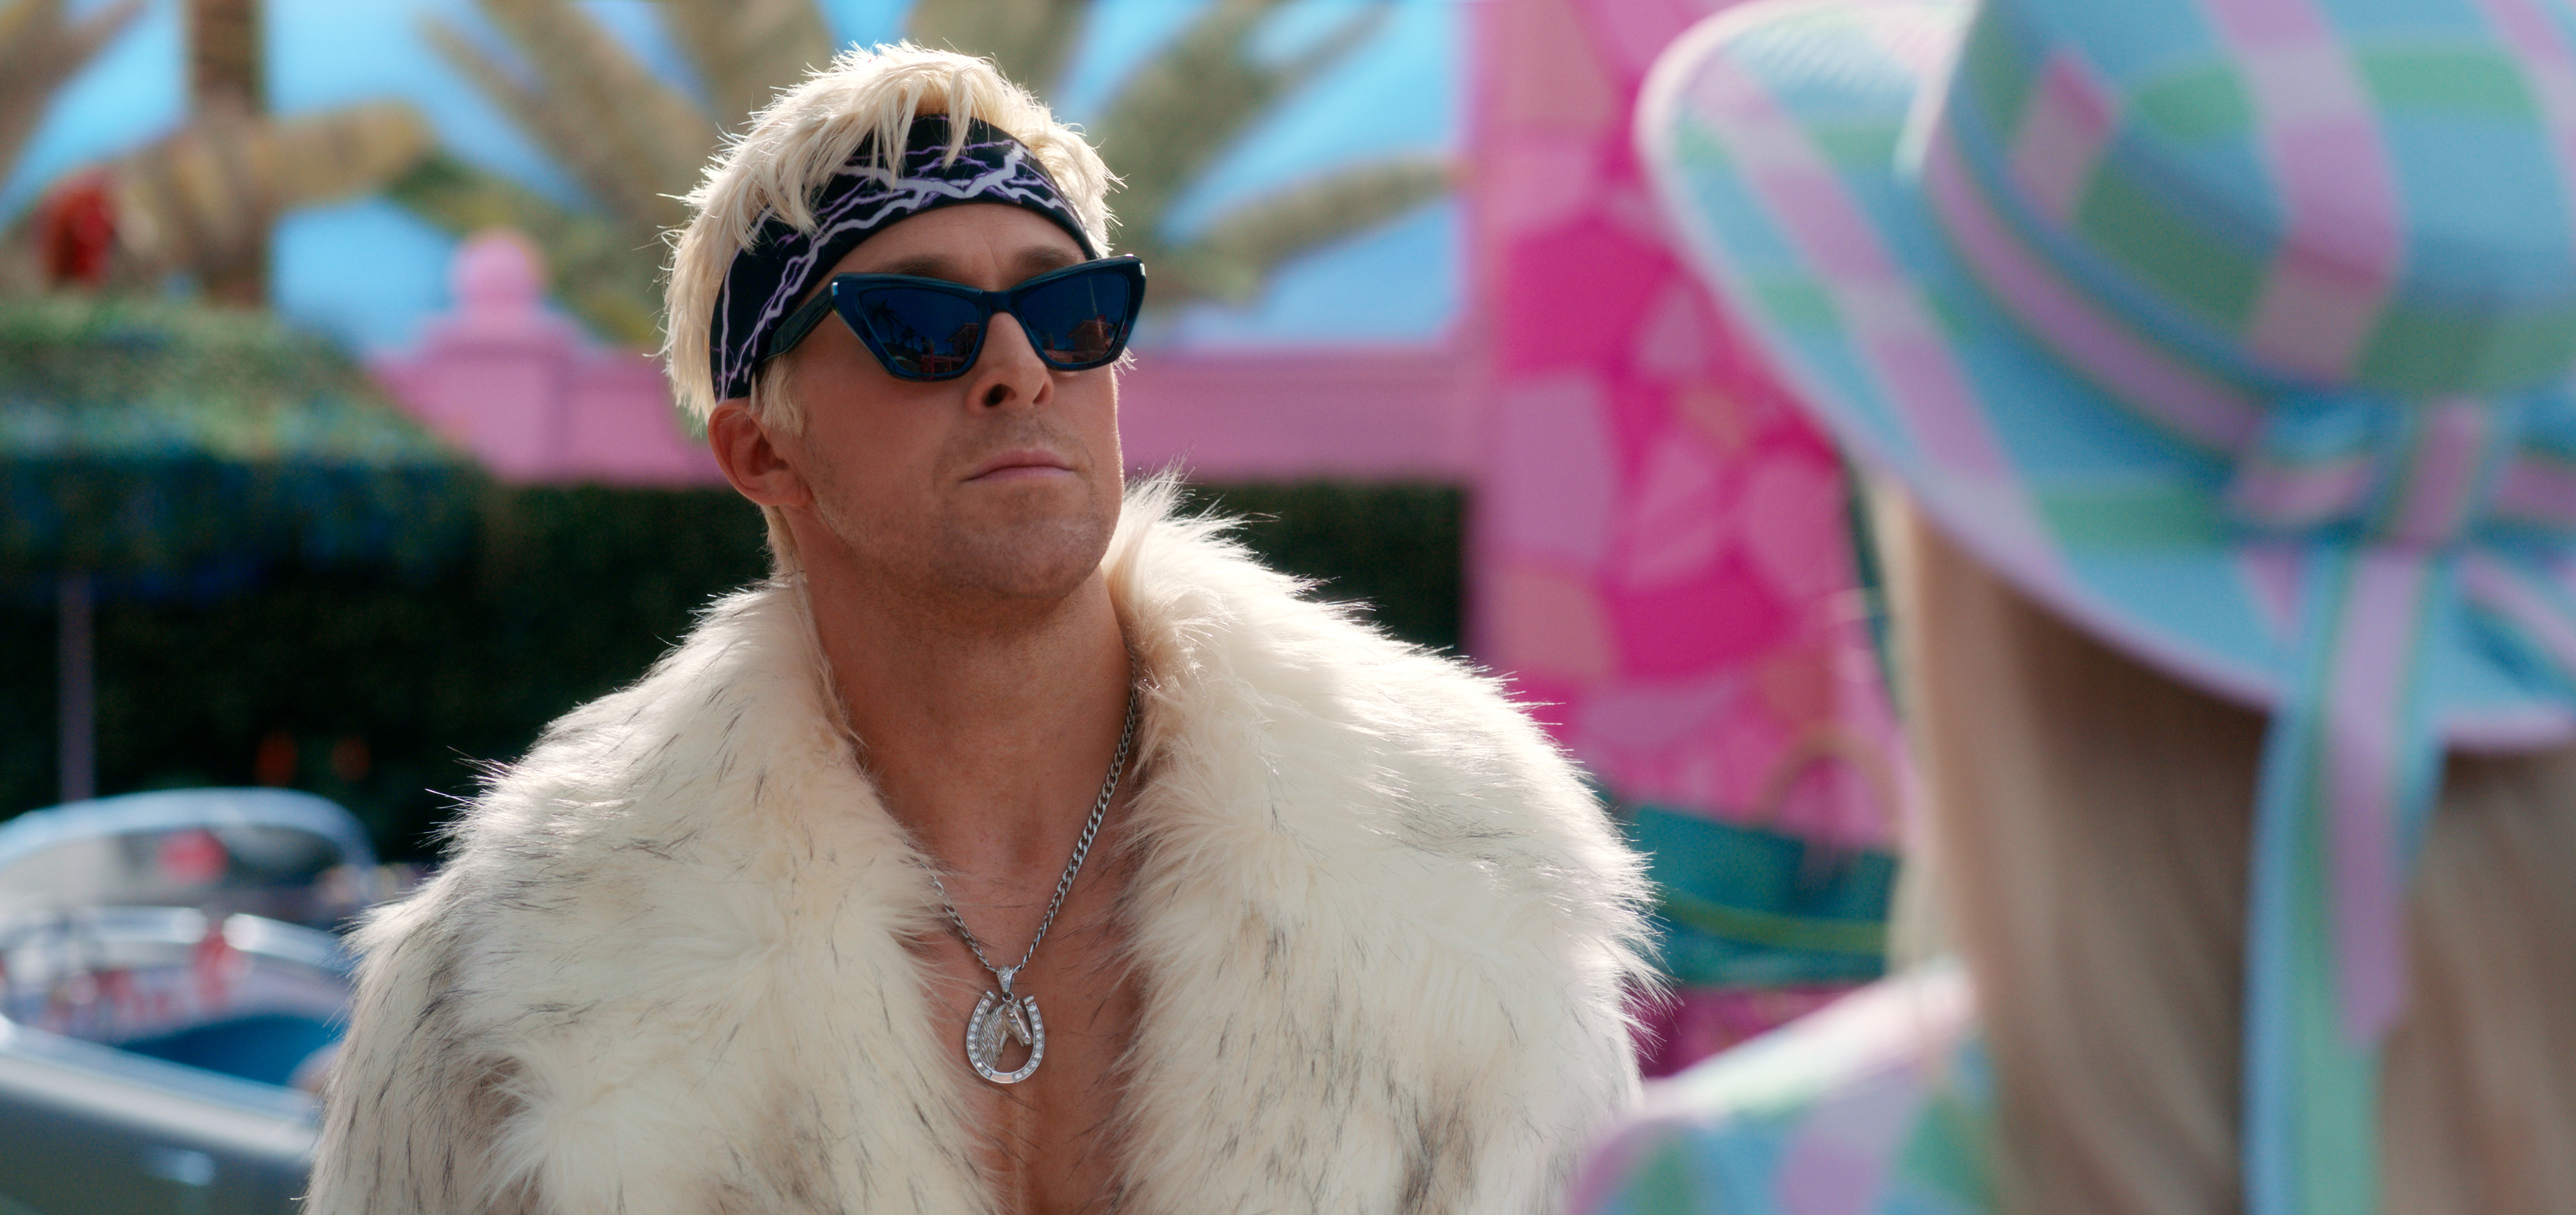 Ken (Ryan Gosling) in sunglasses and a fur coat, looking sassy